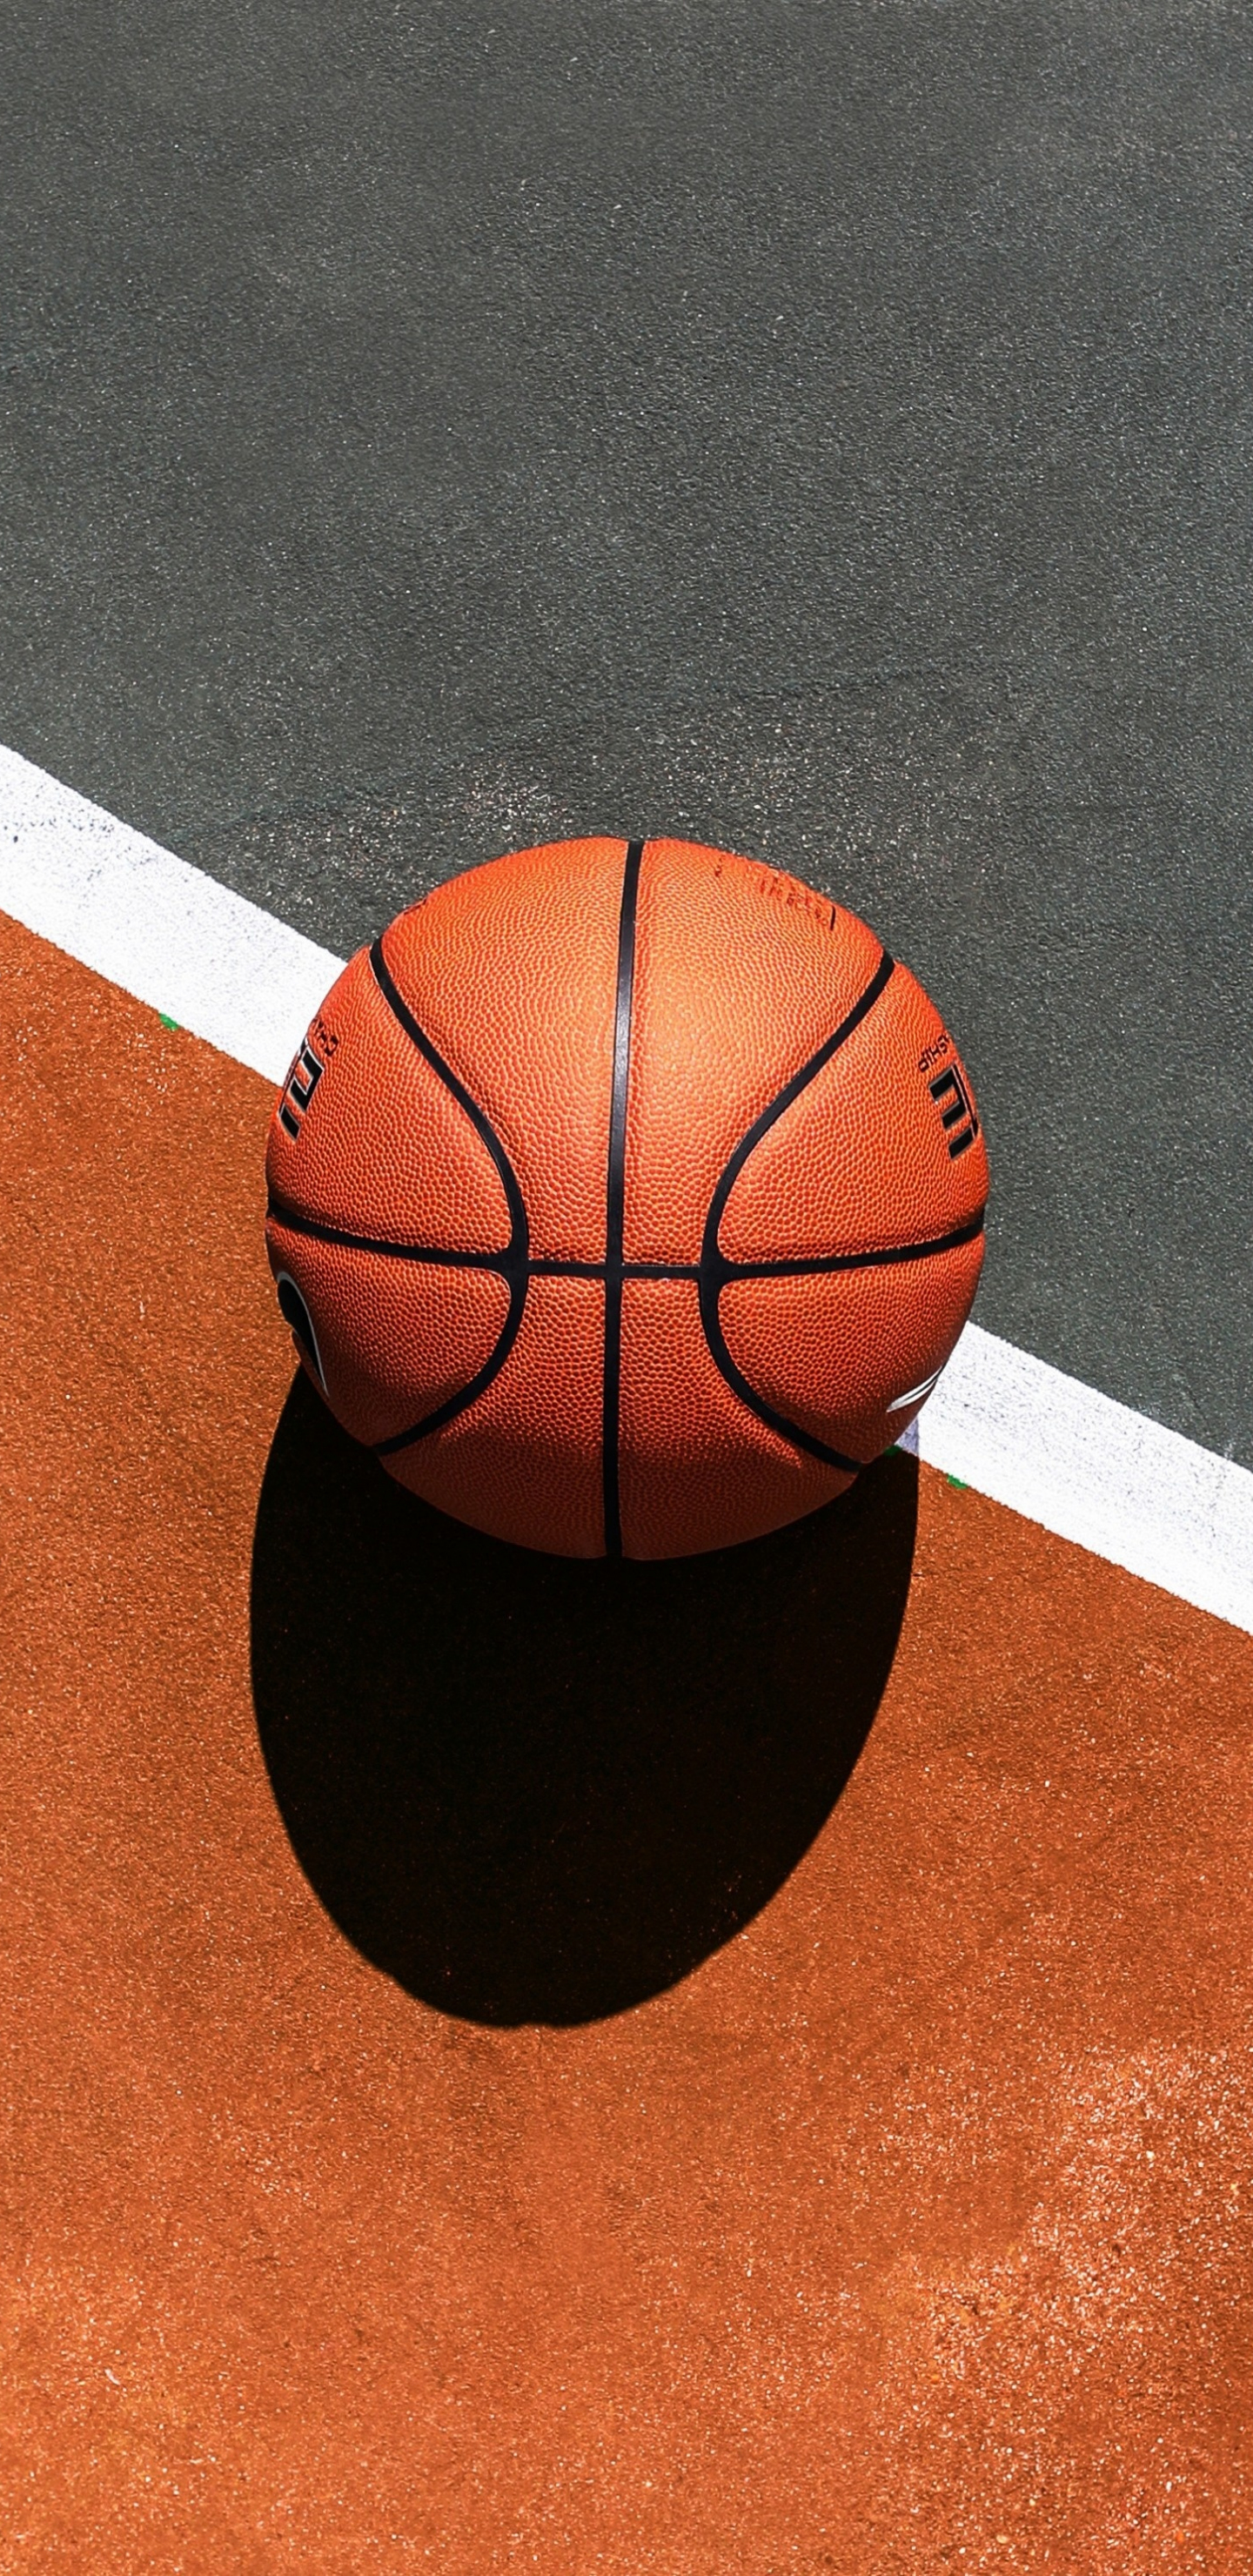 Basketball Wallpaper Samsung